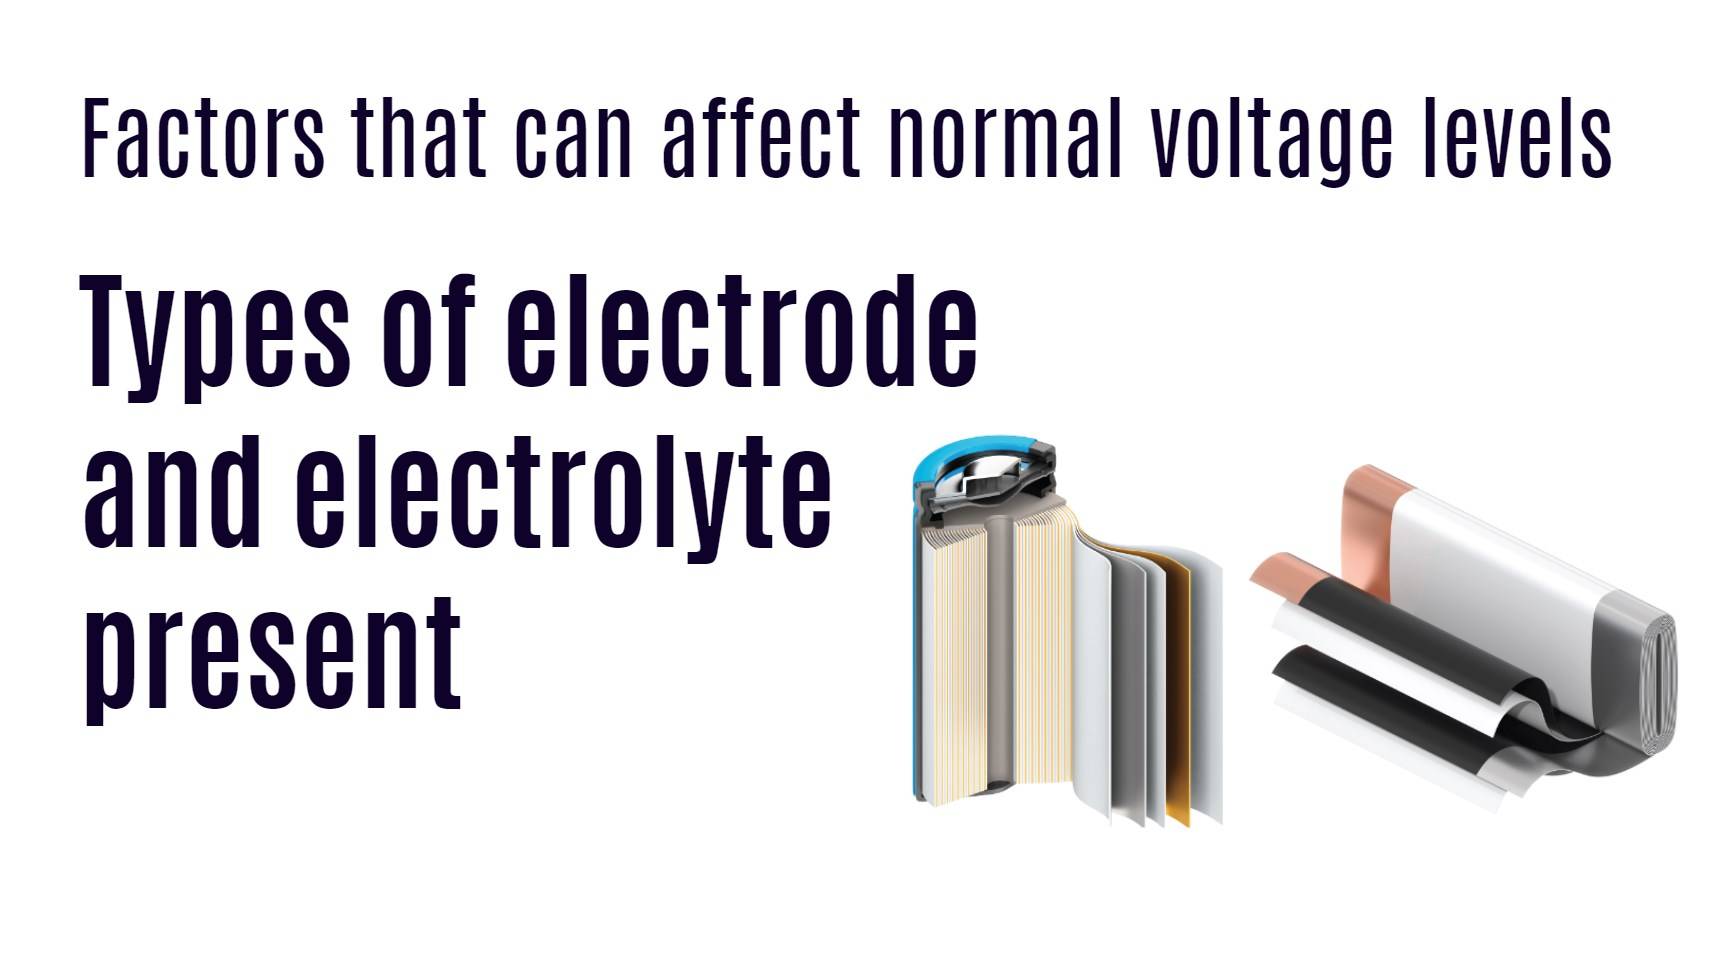 Factors that can affect normal voltage levels